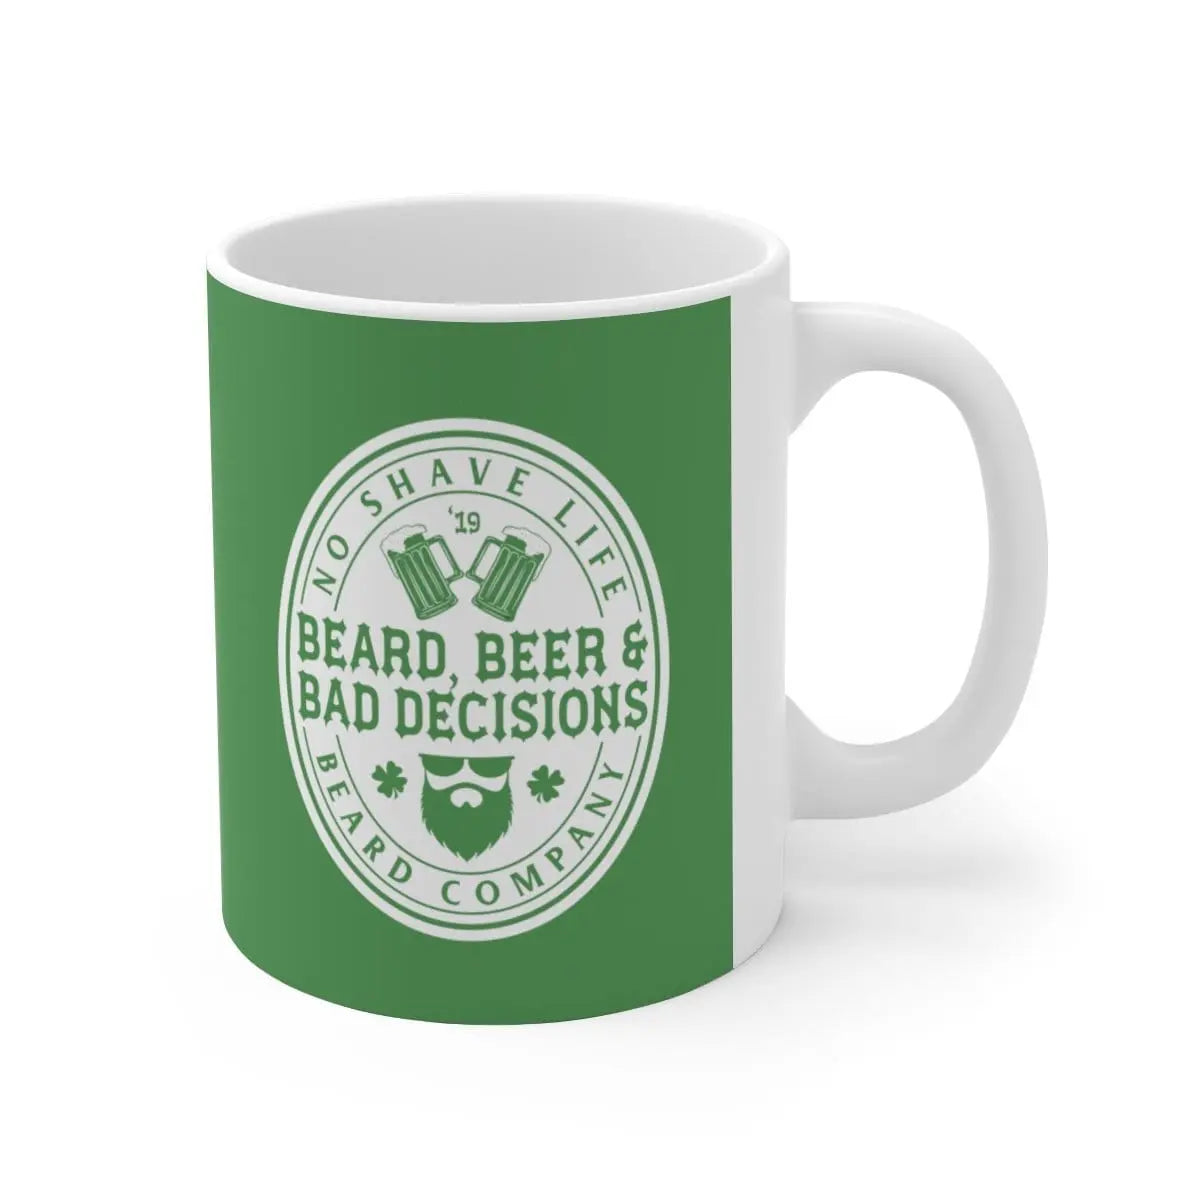 Beard, Beer & Bad Decisions White Ceramic Coffee Mug|Mug